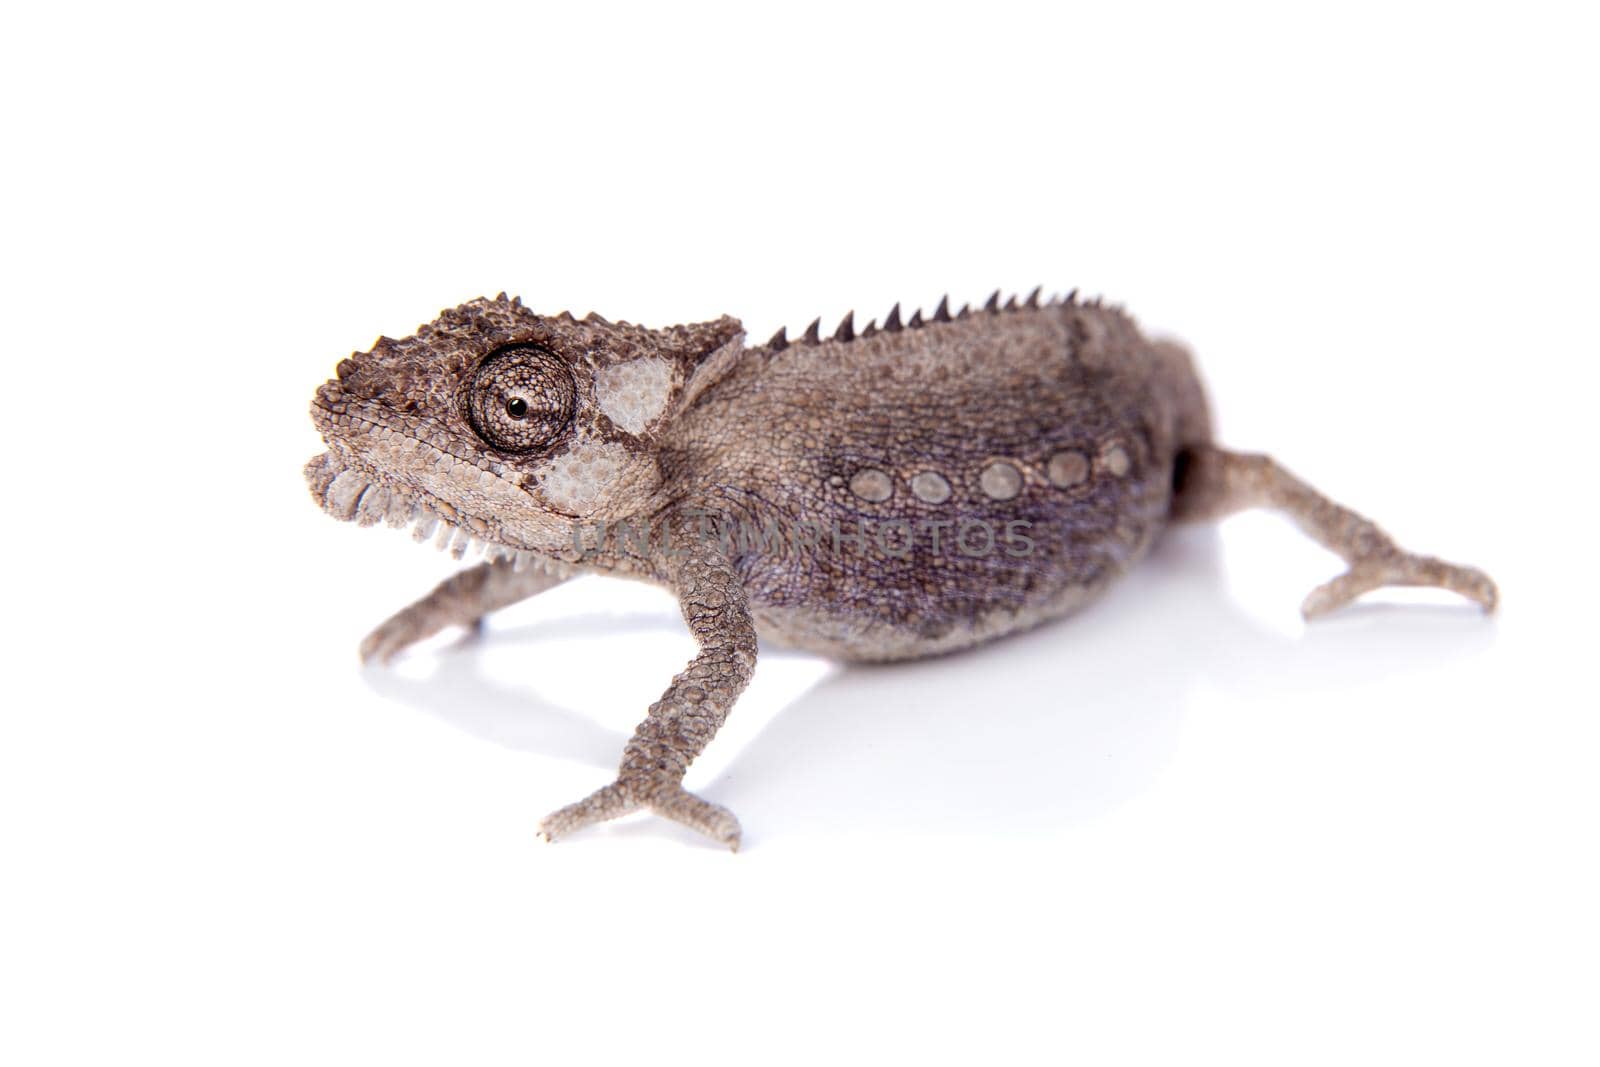 The Namaqua dwarf chameleon or Bradypodion occidentale isolated on white background